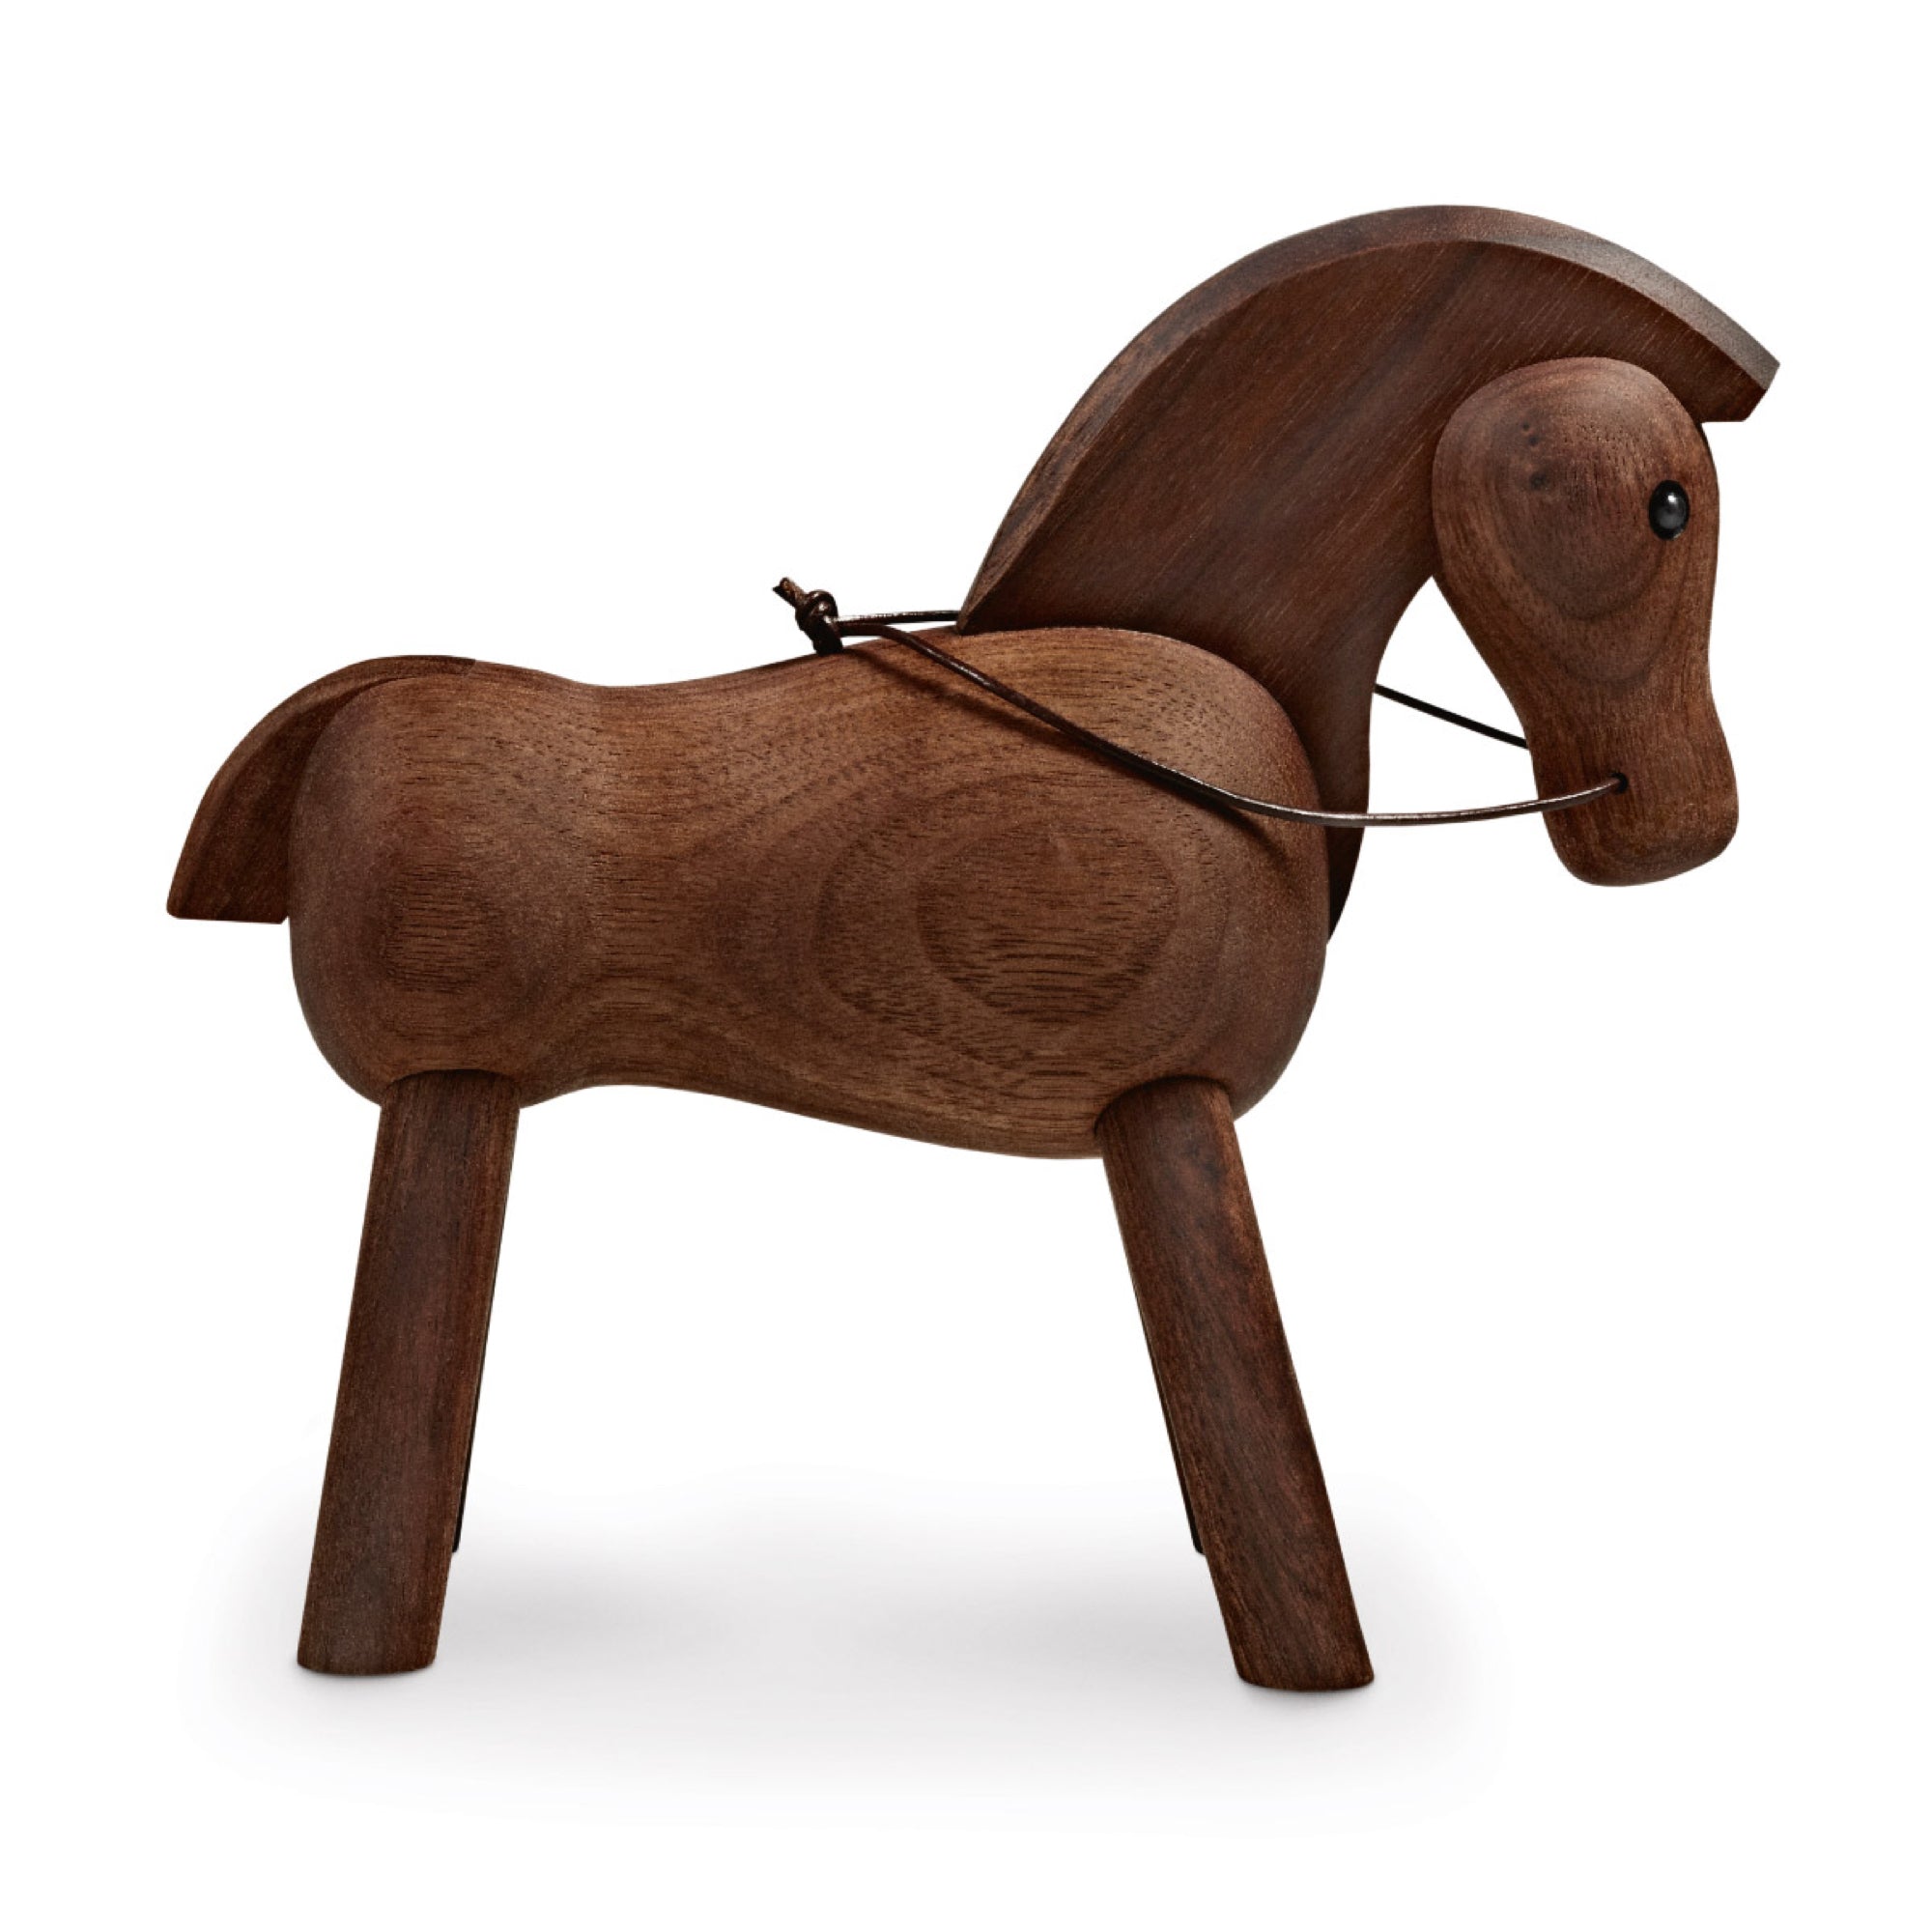 Wooden Horse by Rosendahl